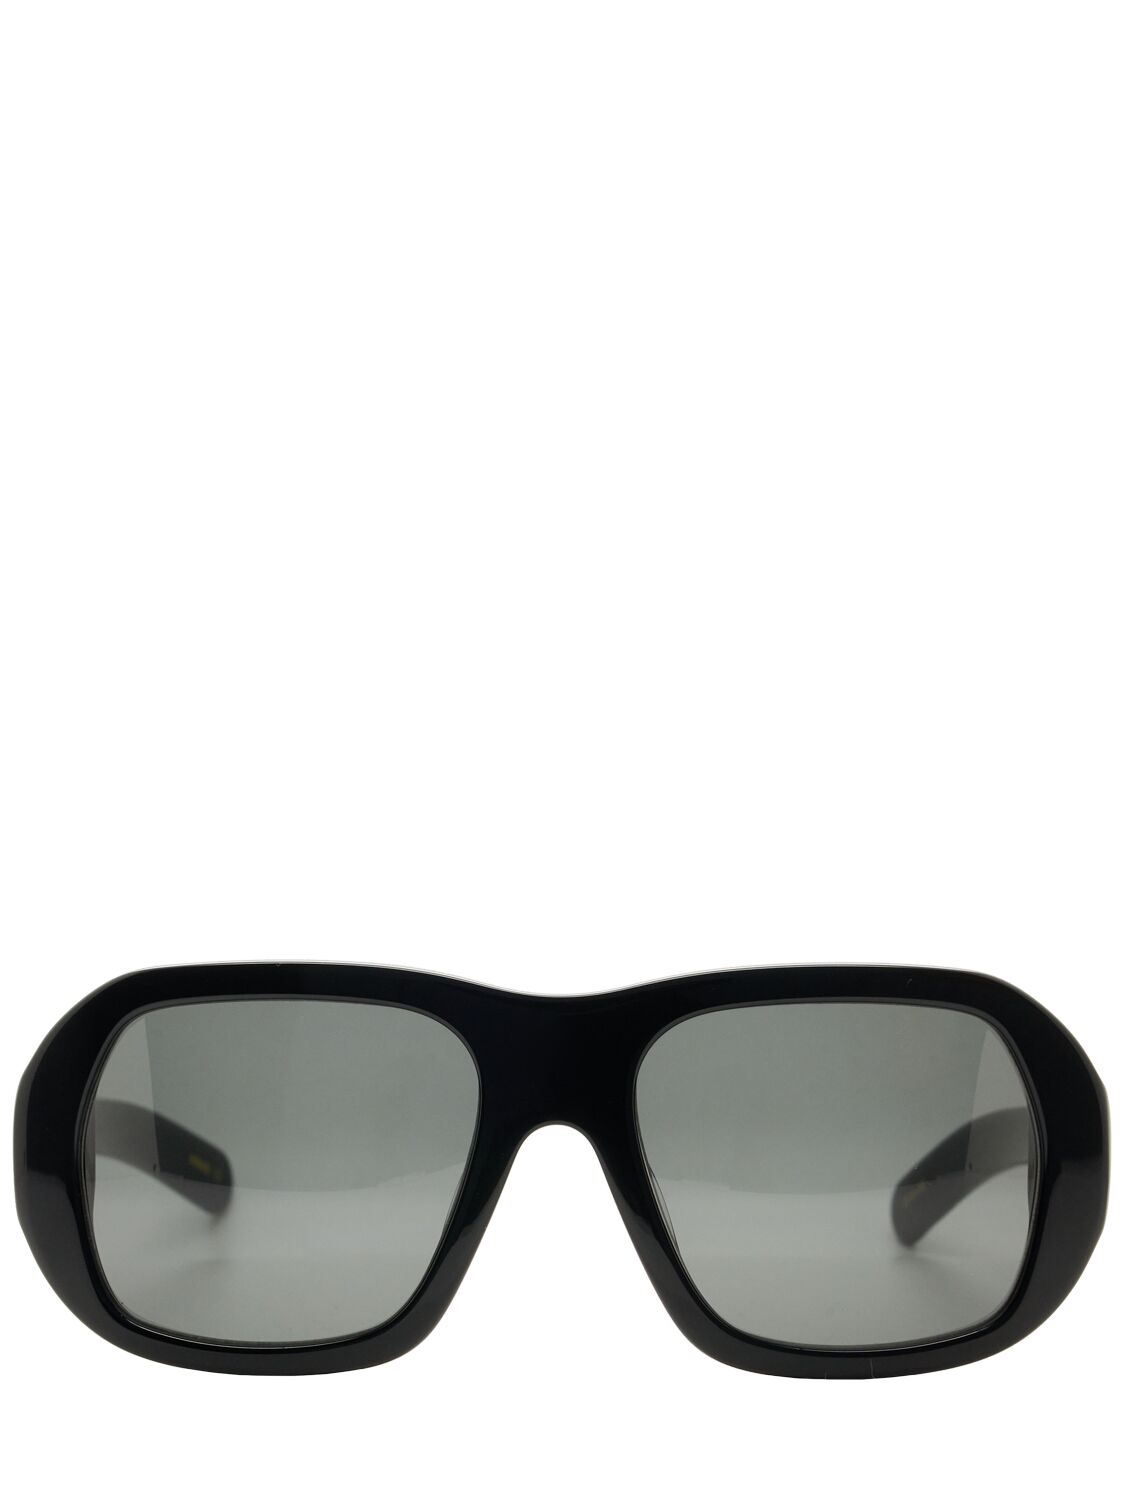 Flatlist Eyewear Ford Acetate Sunglasses W/ Black Lenses